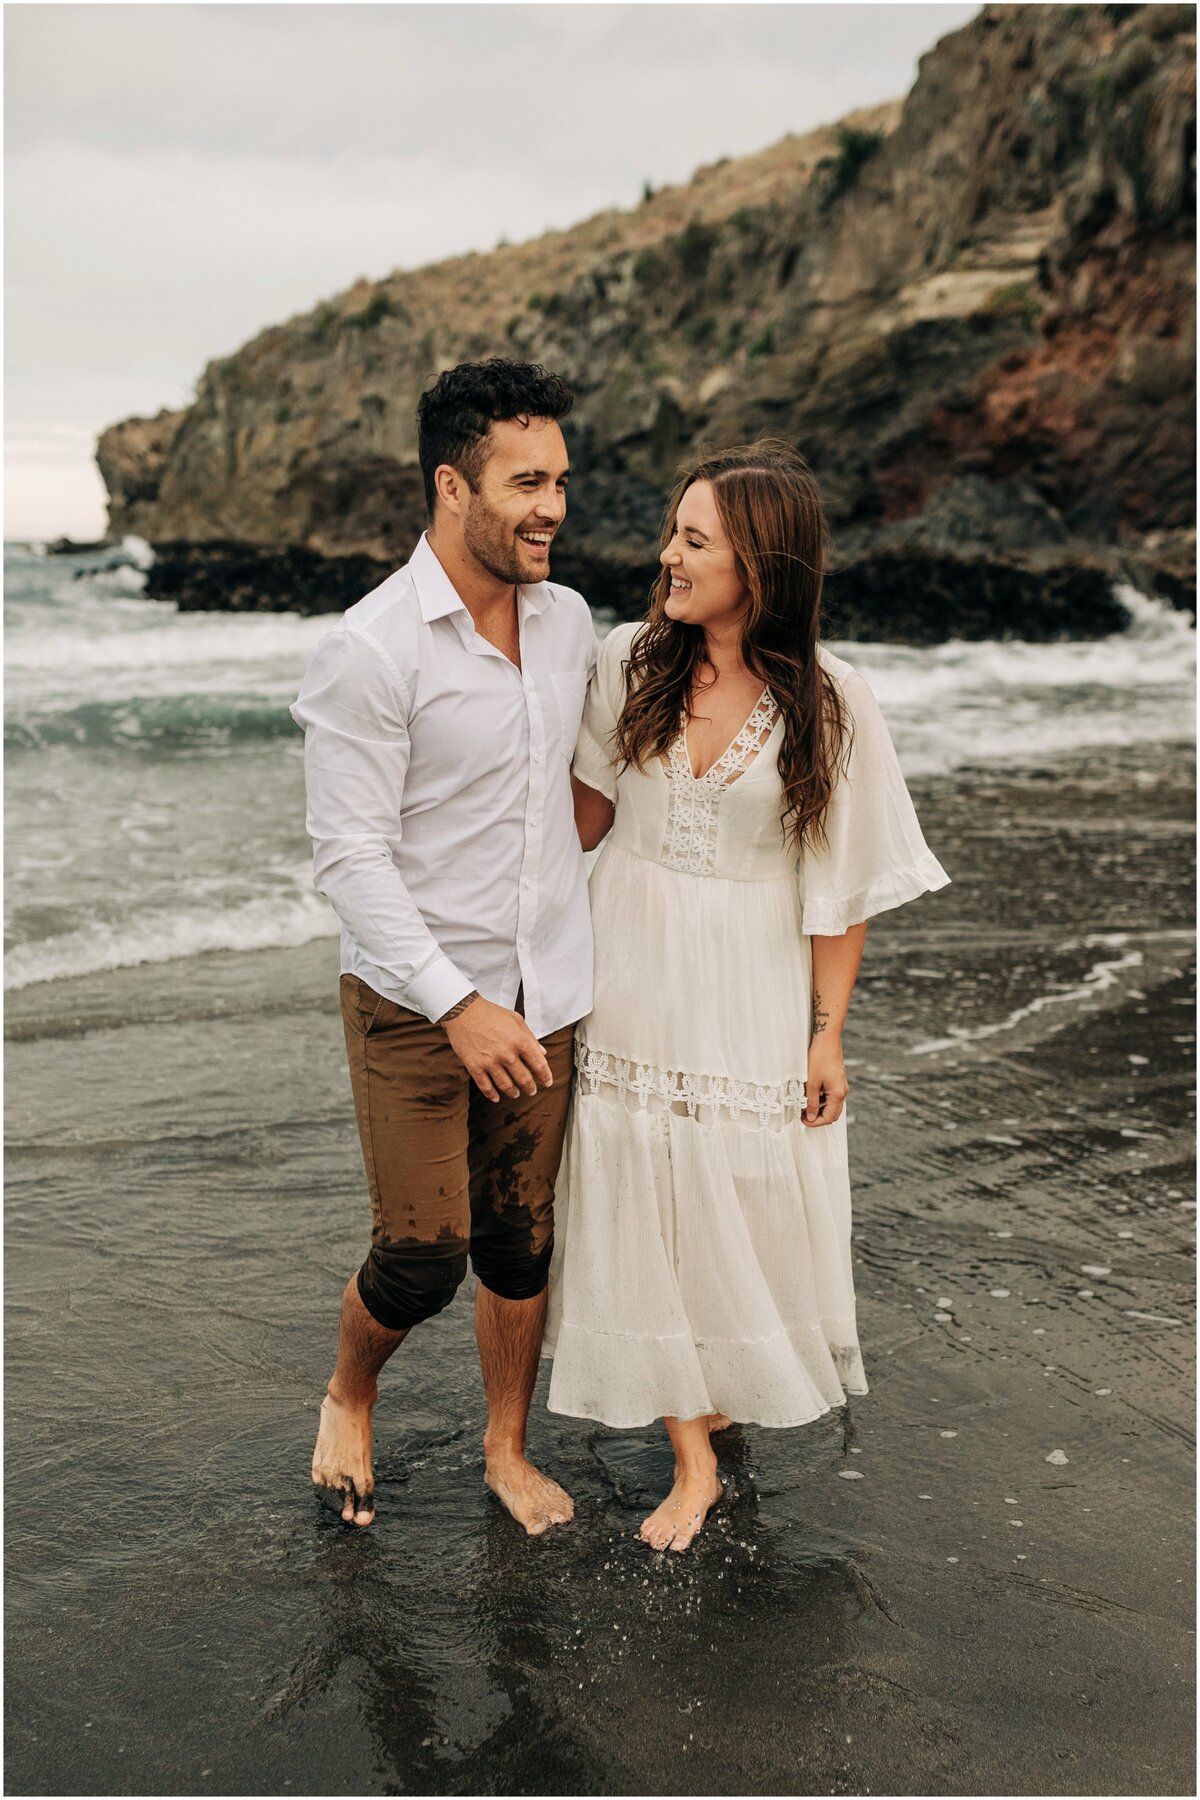 couple engaged beach taylors mistake shoot christchurch water sunset summer photographer wedding happy white dress